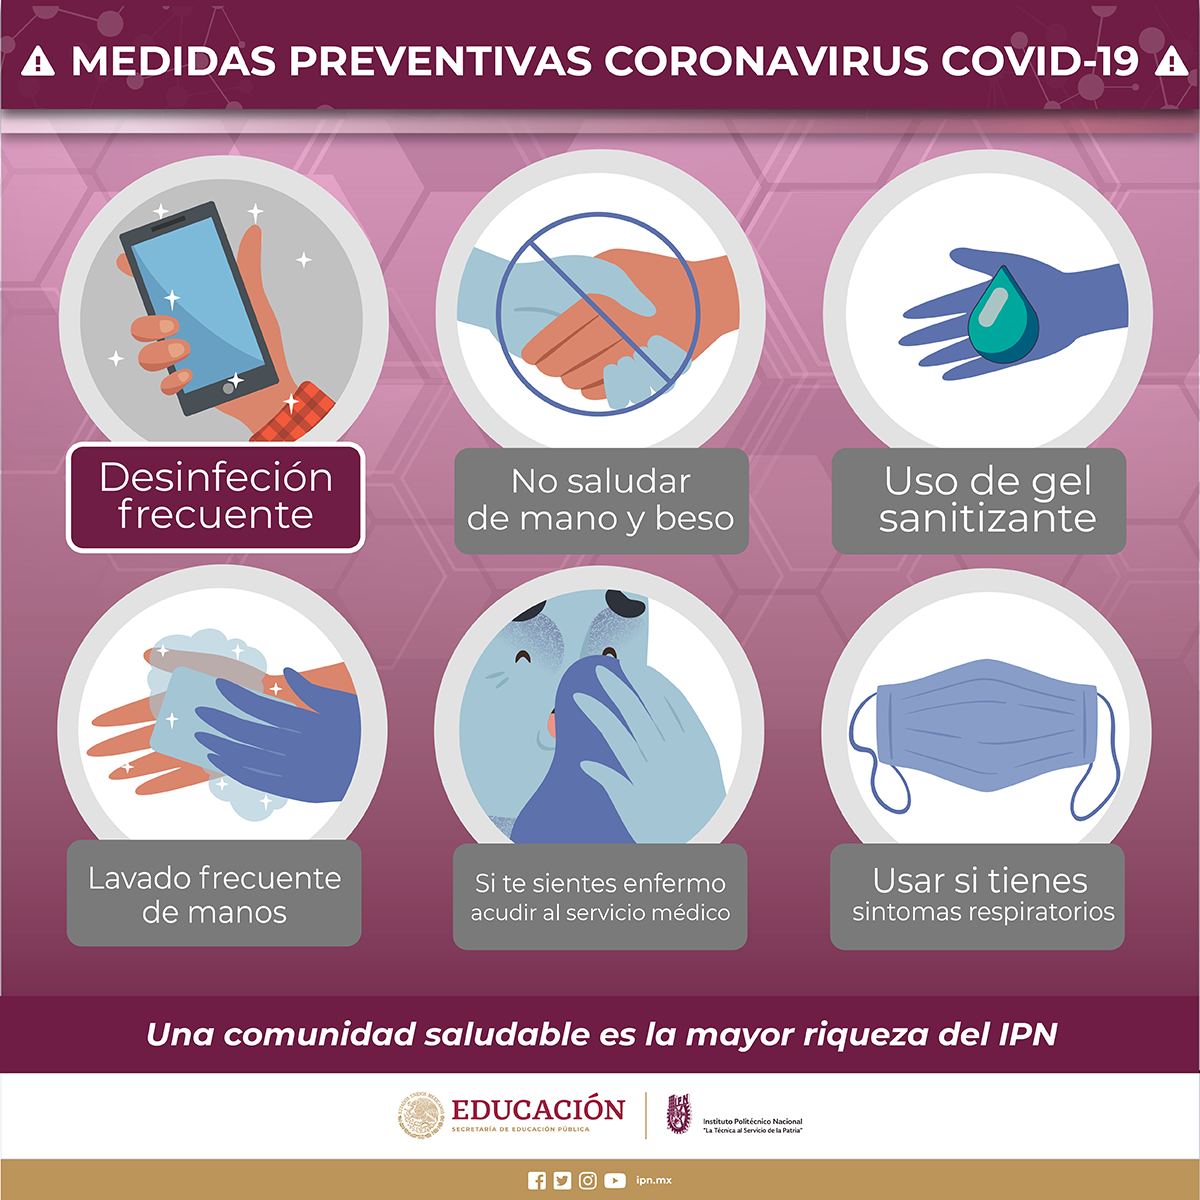 MEDIDAS PREVENTIVAS CONTRA COVID-19